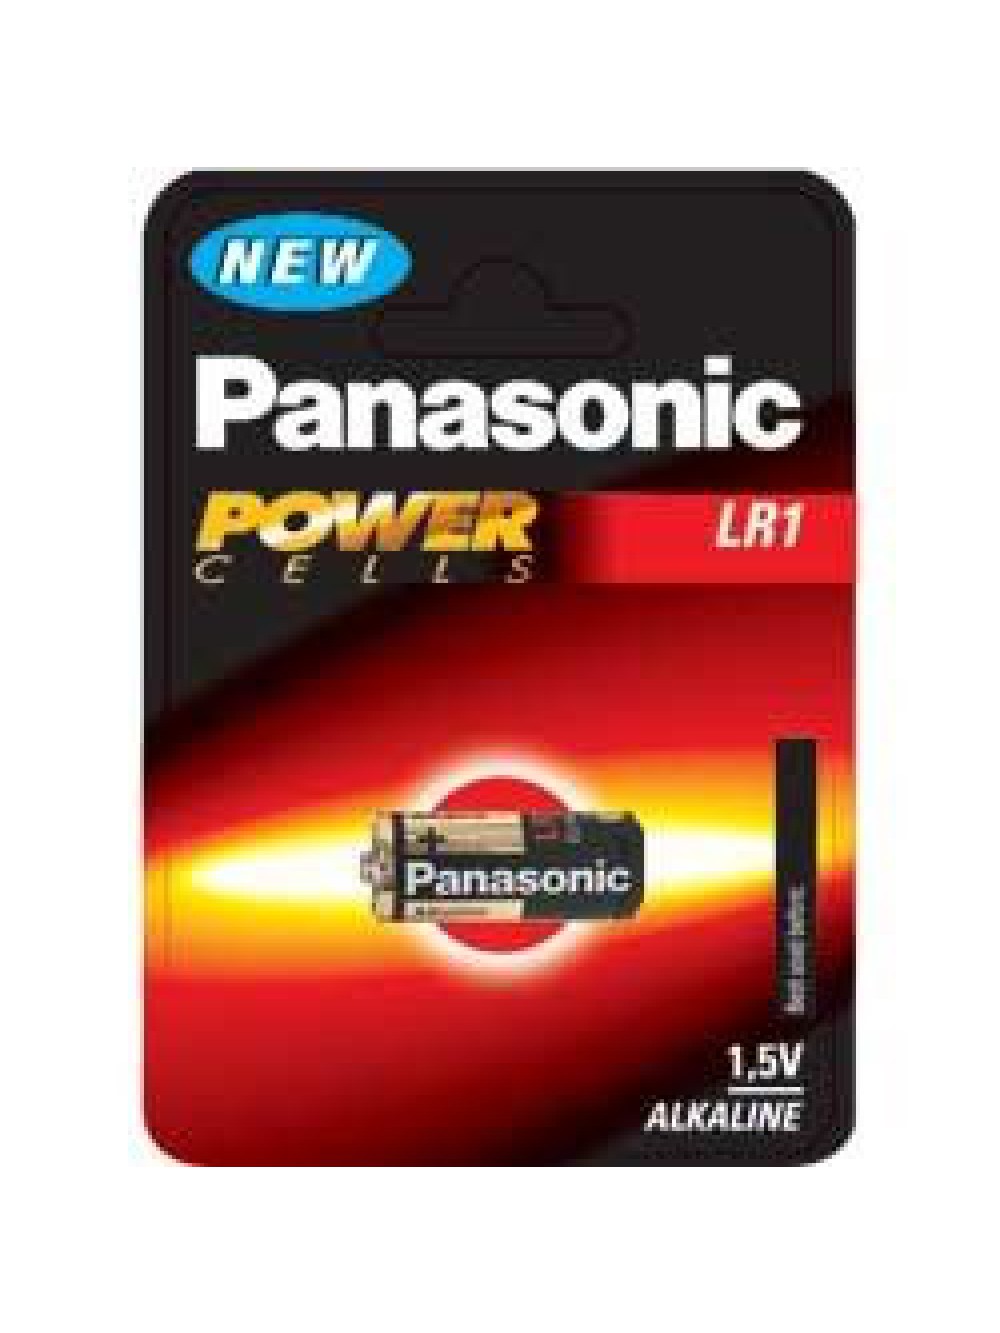 Panasonic Batterie Alkali Lady ZollNZoll Blister - Cell Power